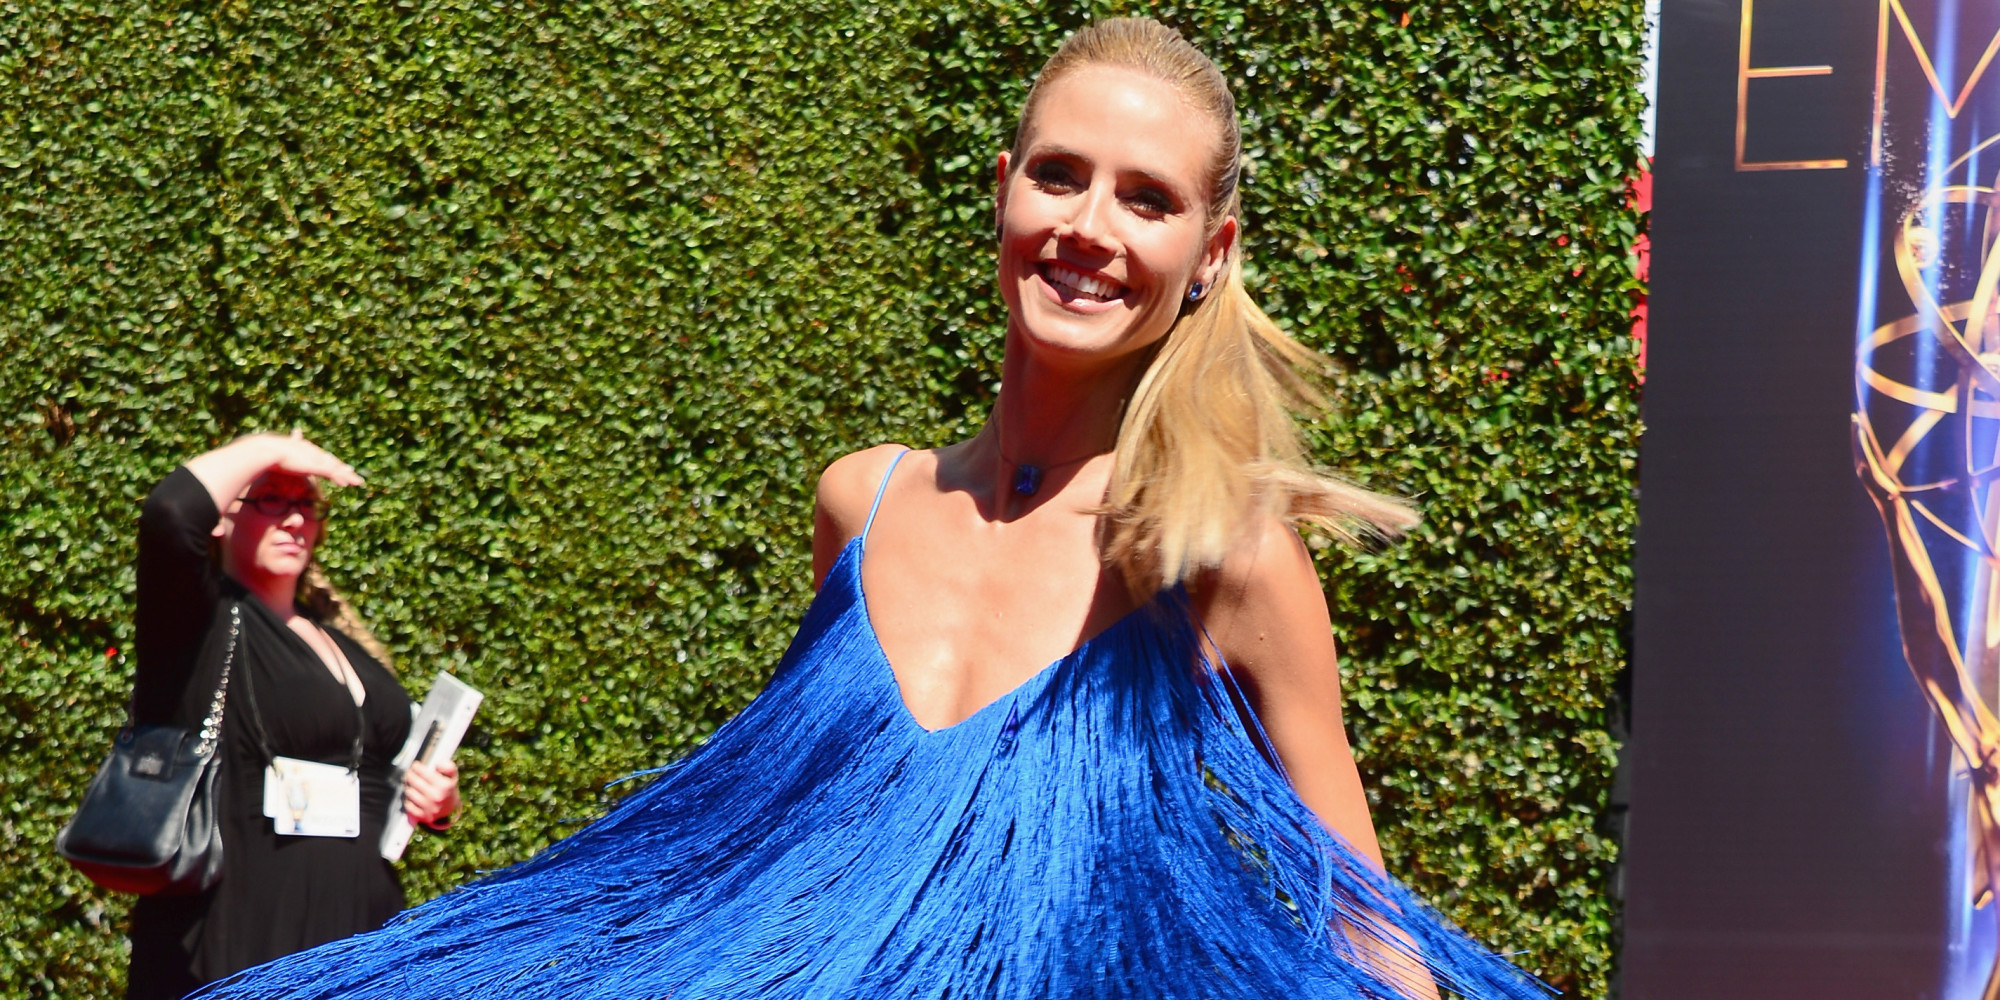 Heidi Klum's Creative Arts Emmy Awards Dress Is A Blue, Fringed Showstopper